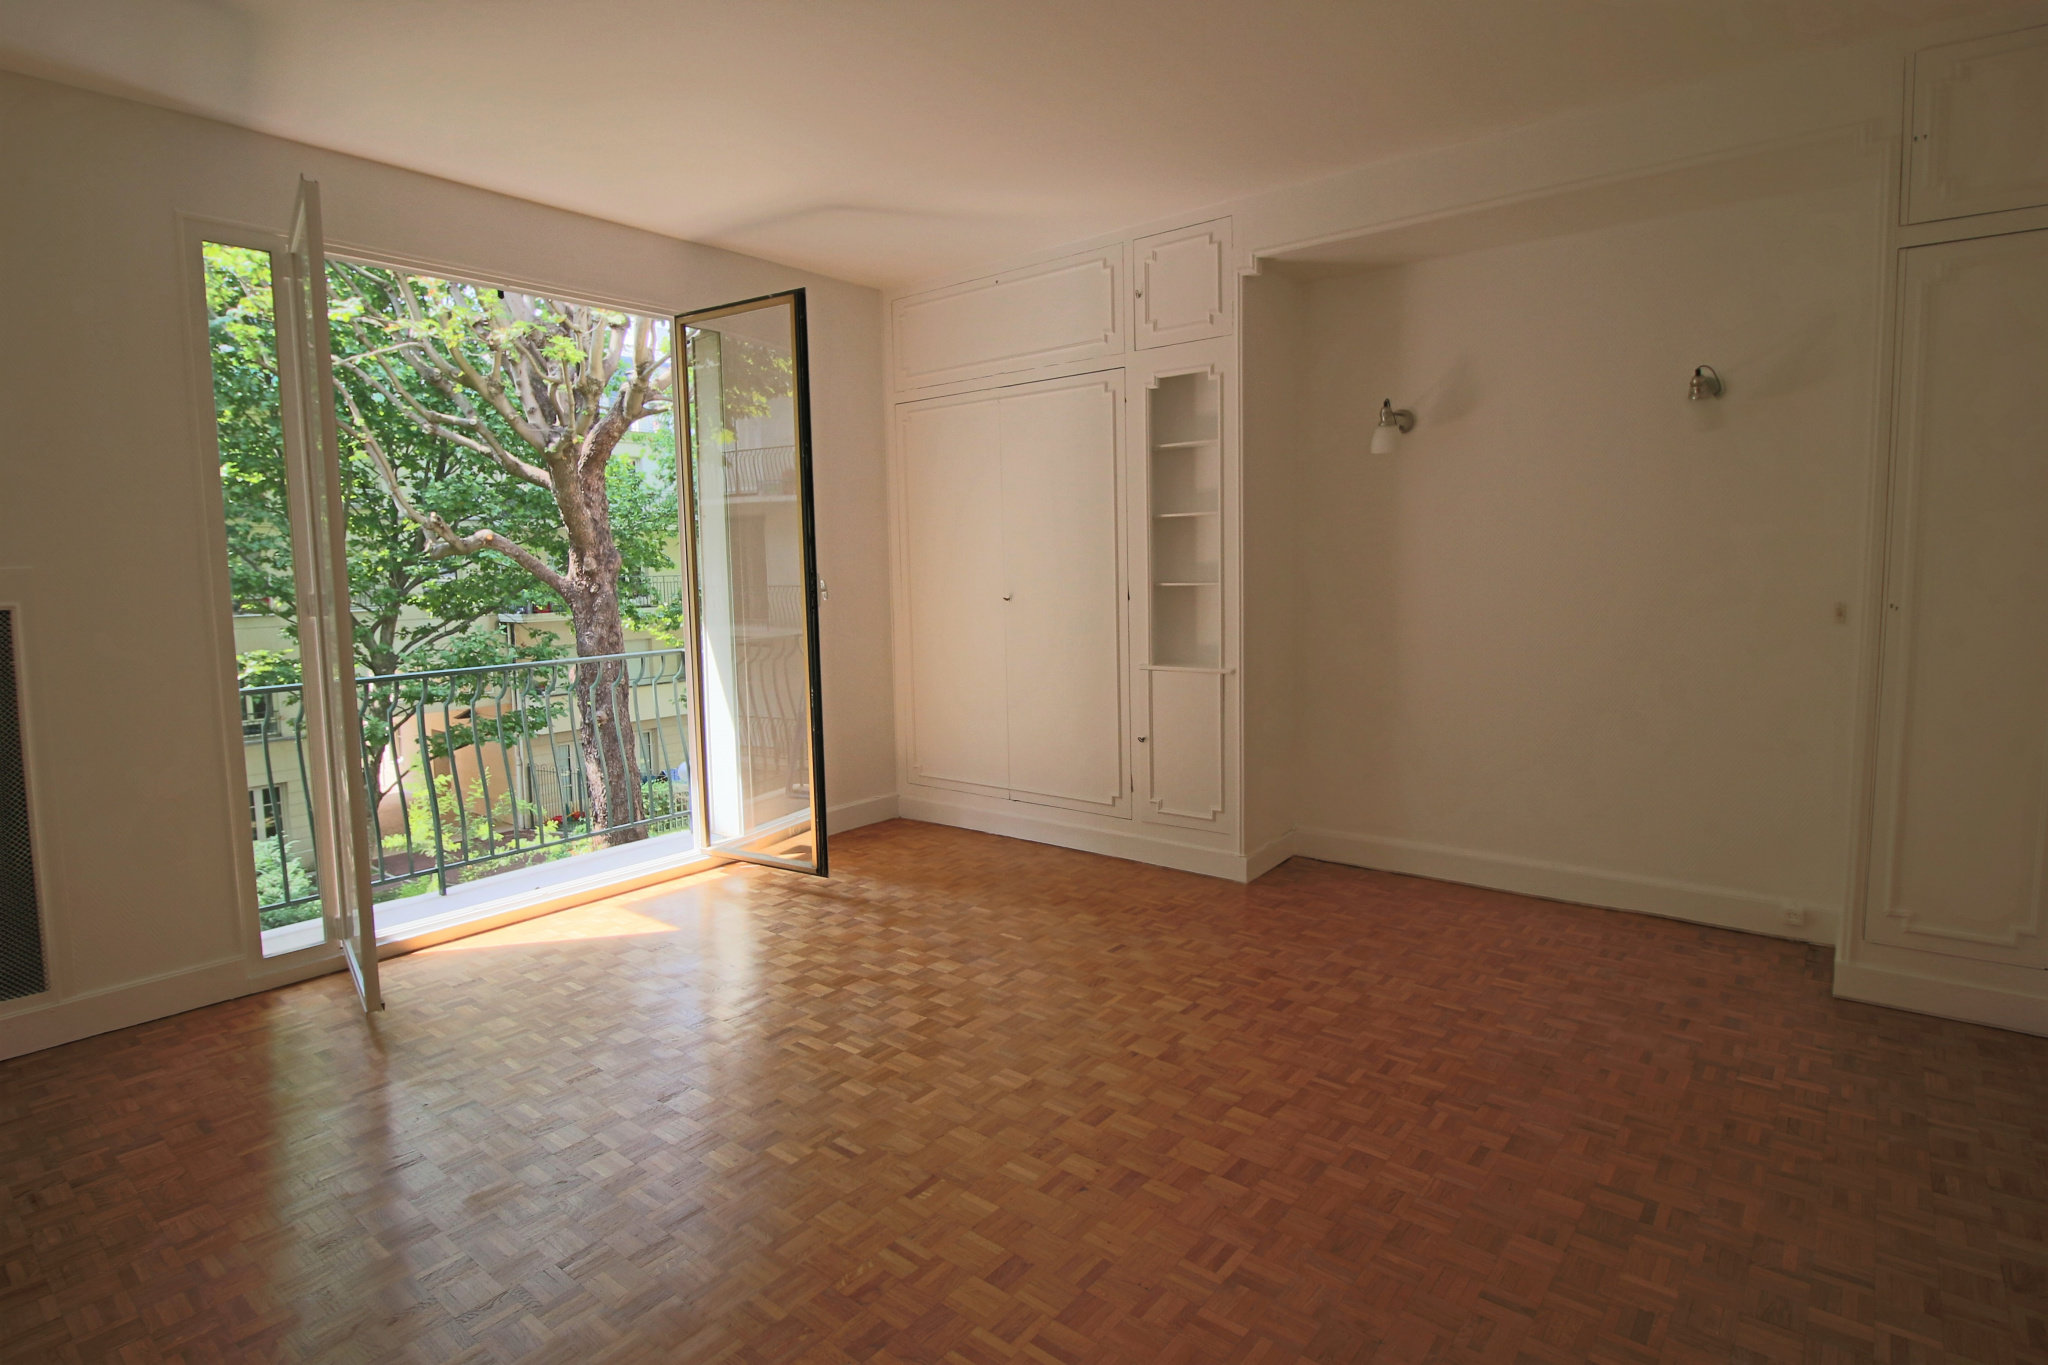 Appartement a louer neuilly-sur-seine - 1 pièce(s) - 35.82 m2 - Surfyn